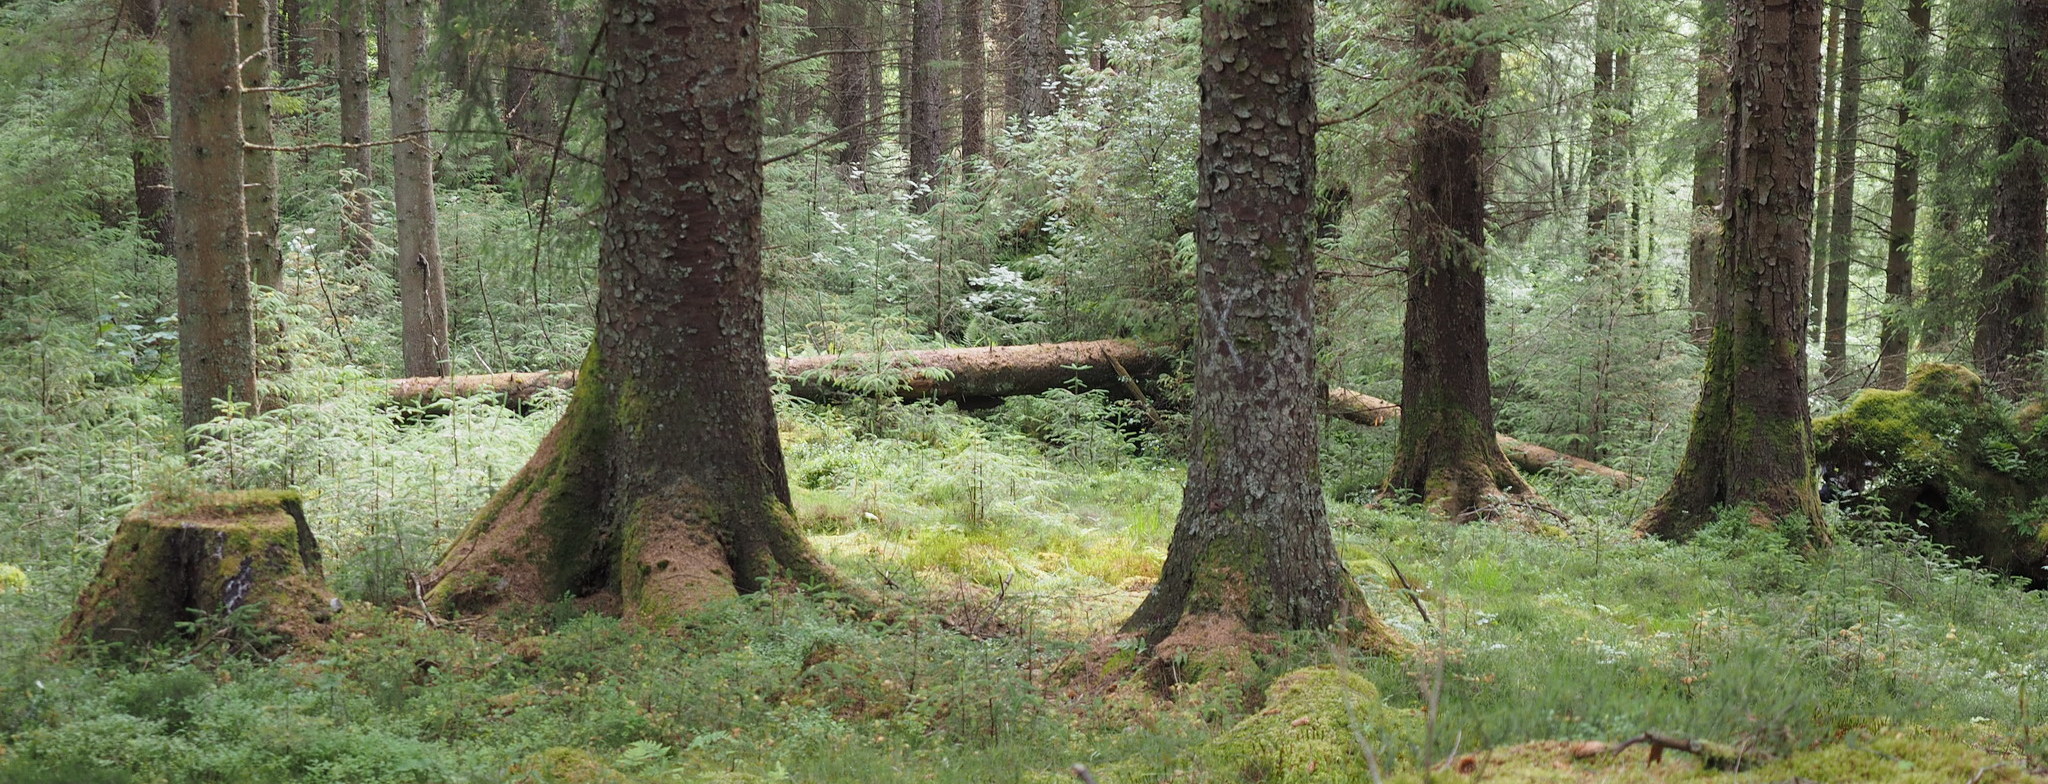 Mixed Conifer Forest (C) Luicie Vitkova